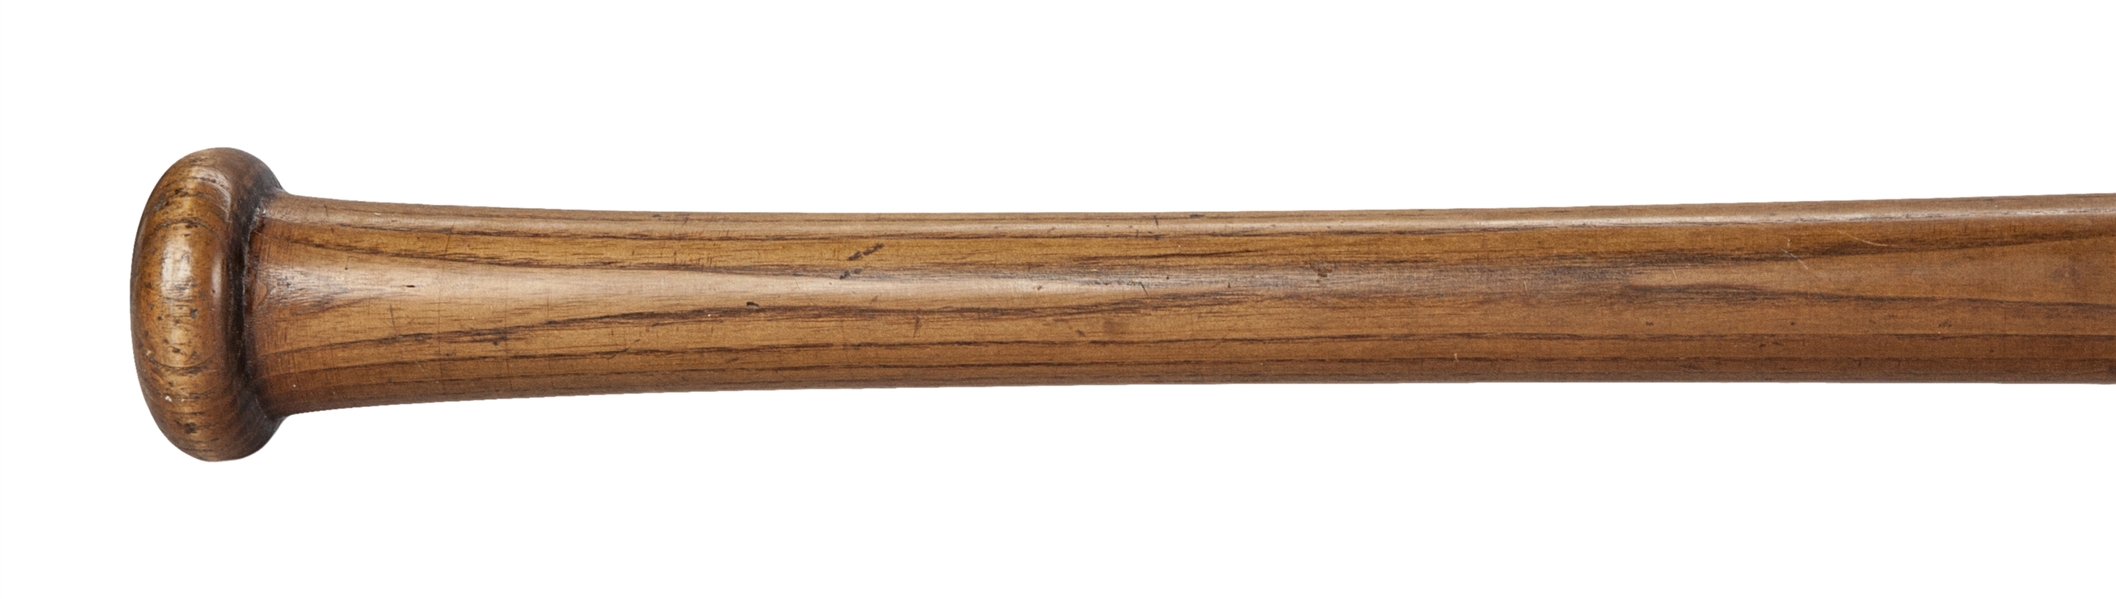 Lot Detail - Replica 1935 Babe Ruth Game Bat Louisville Slugger 125 34